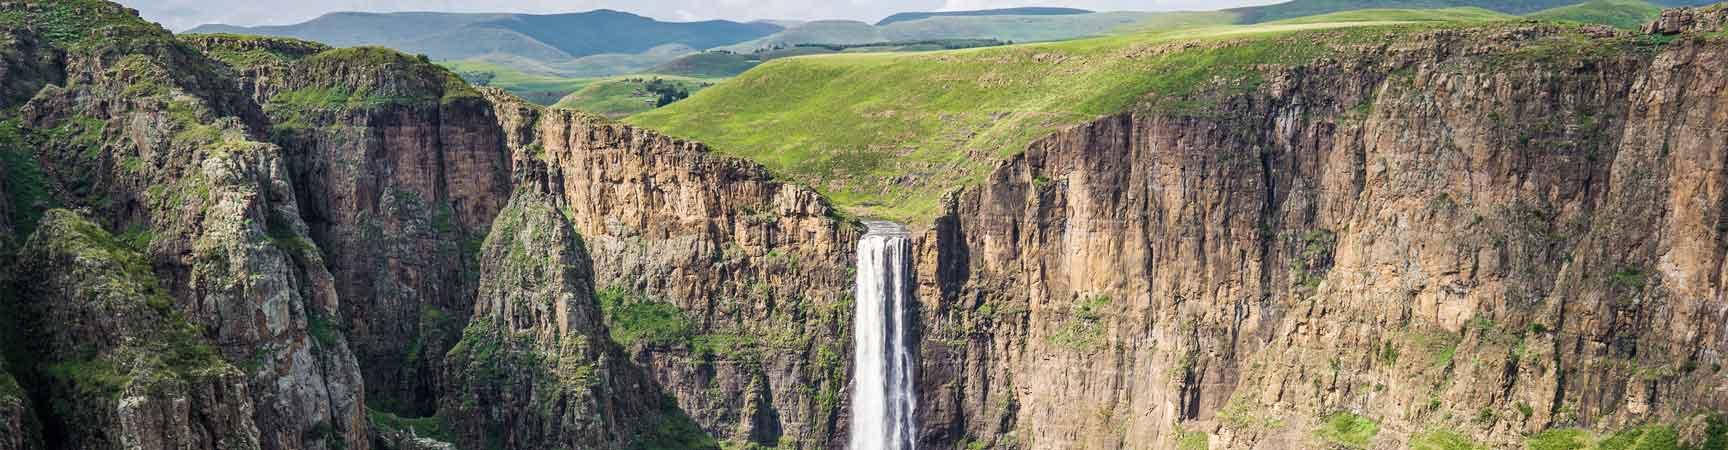 Lesothowasserfall Panorama Bild. Wallpaper